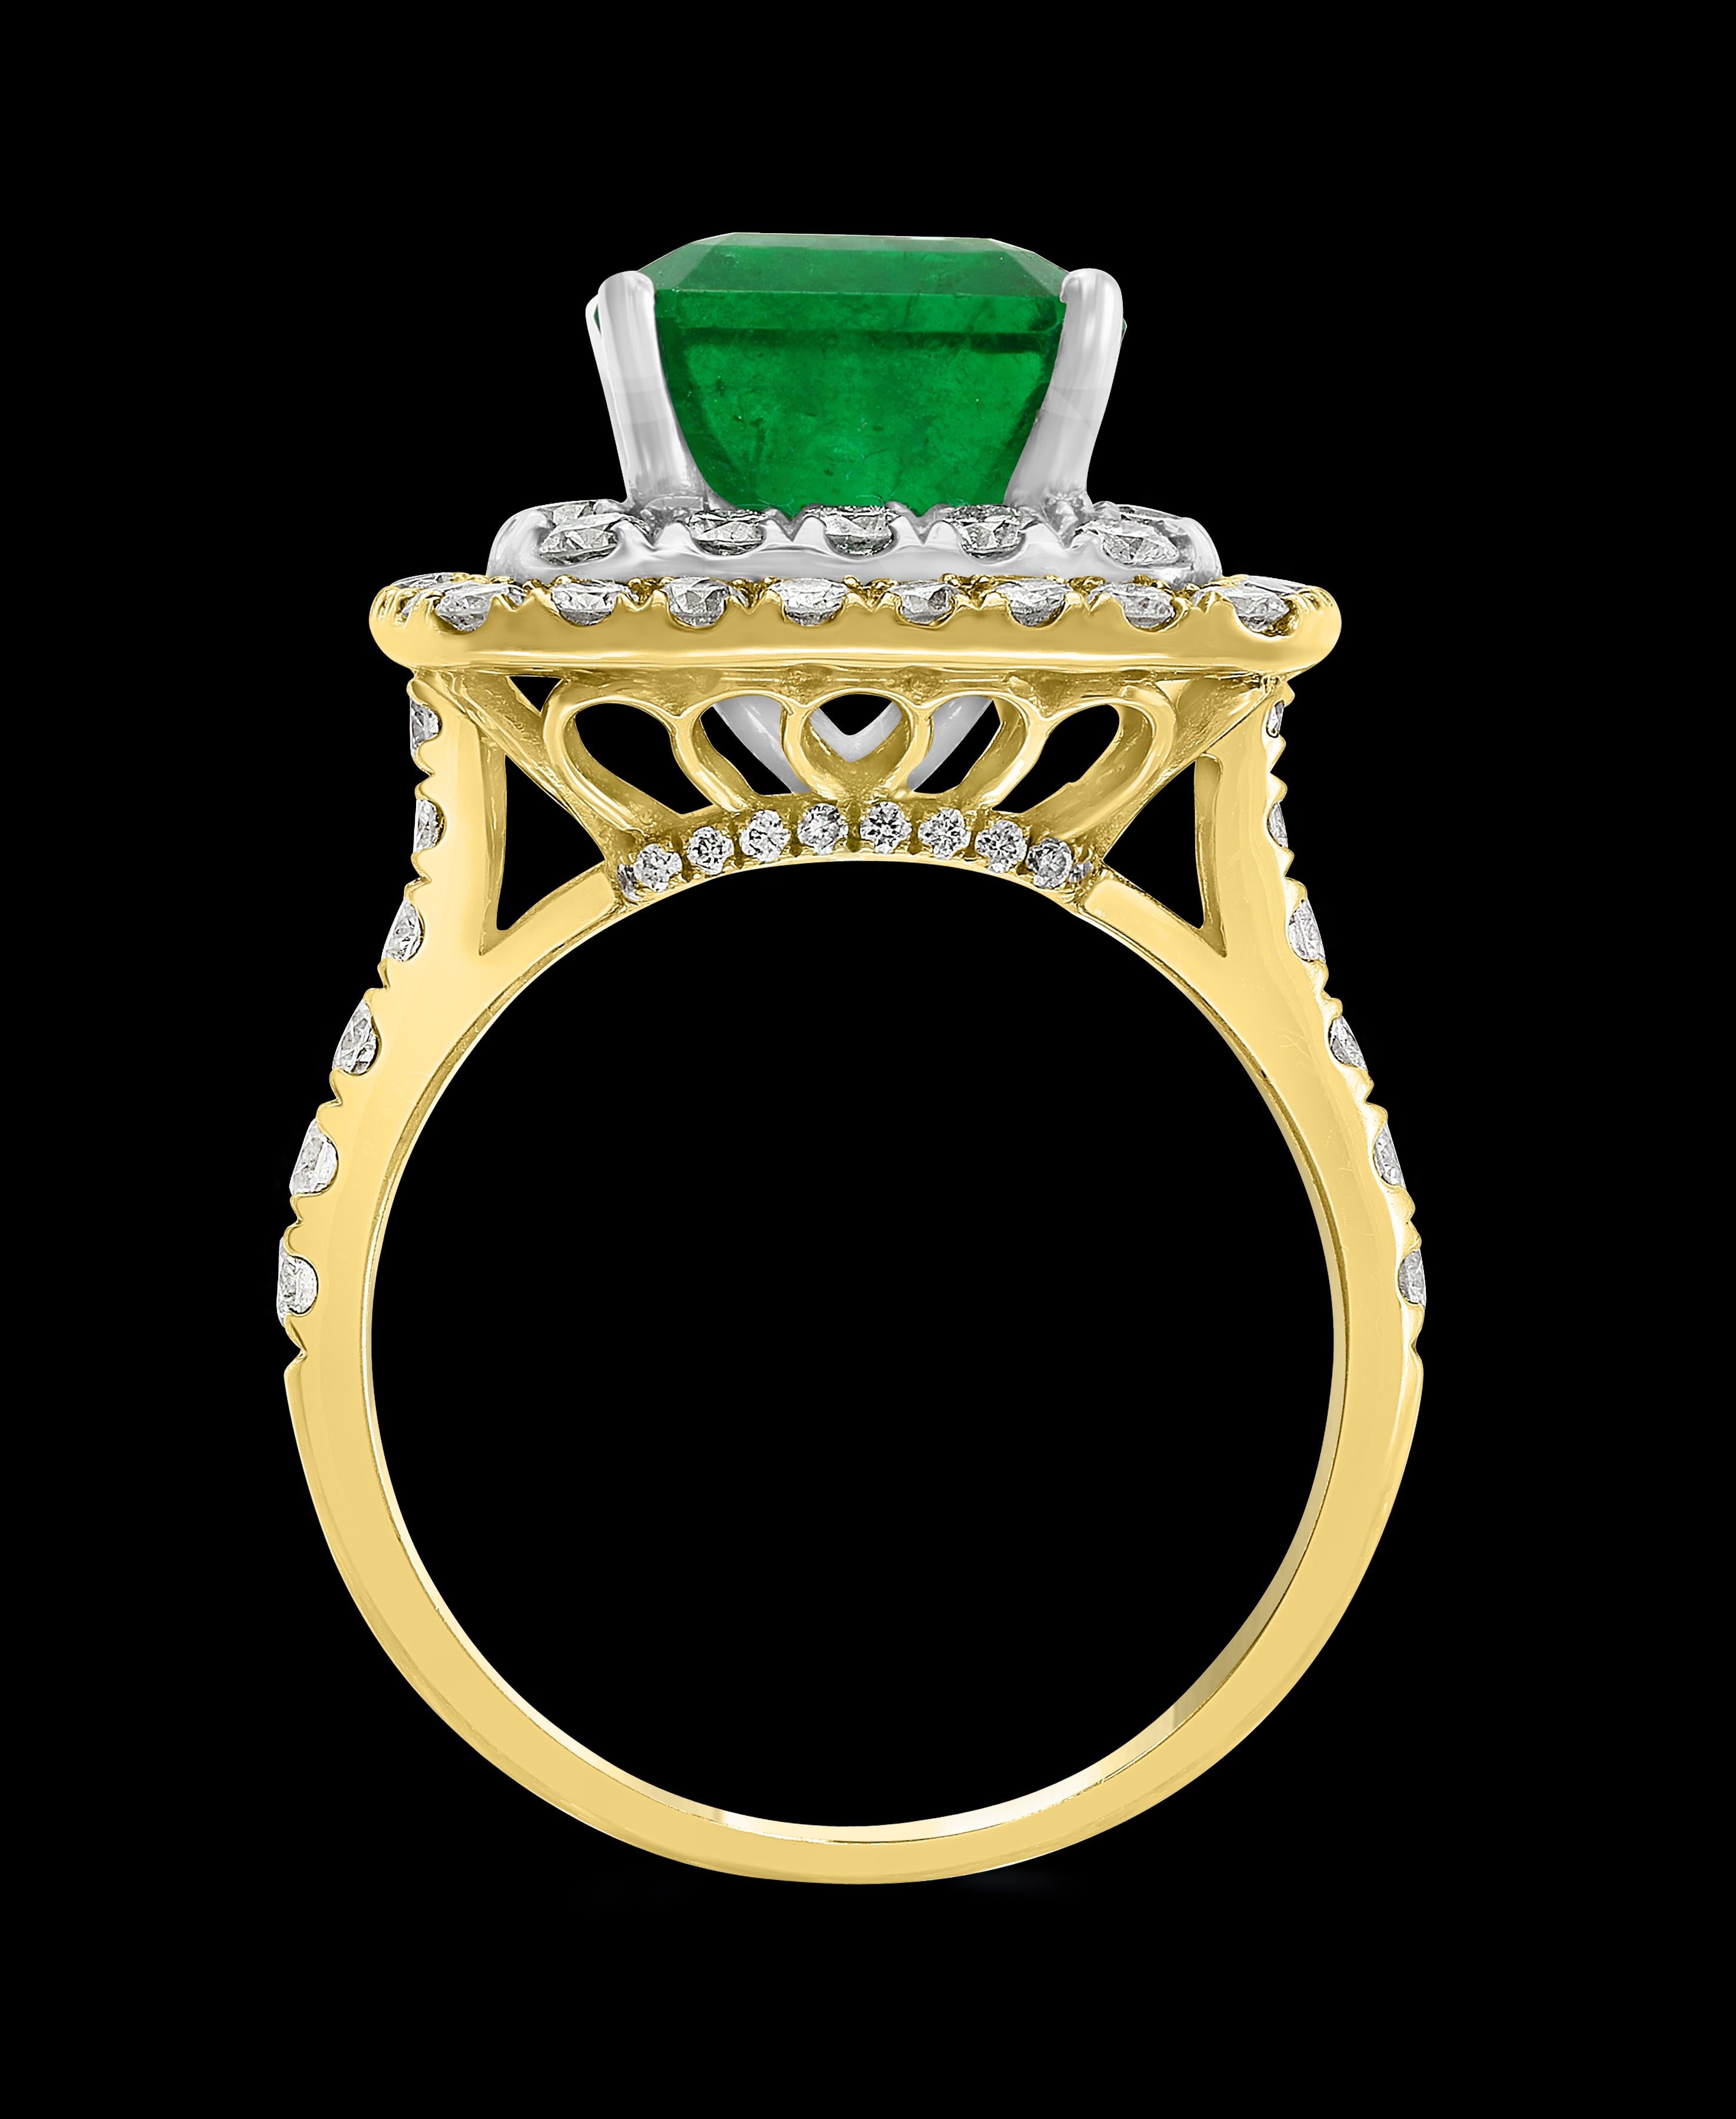 4.5 carat emerald ring